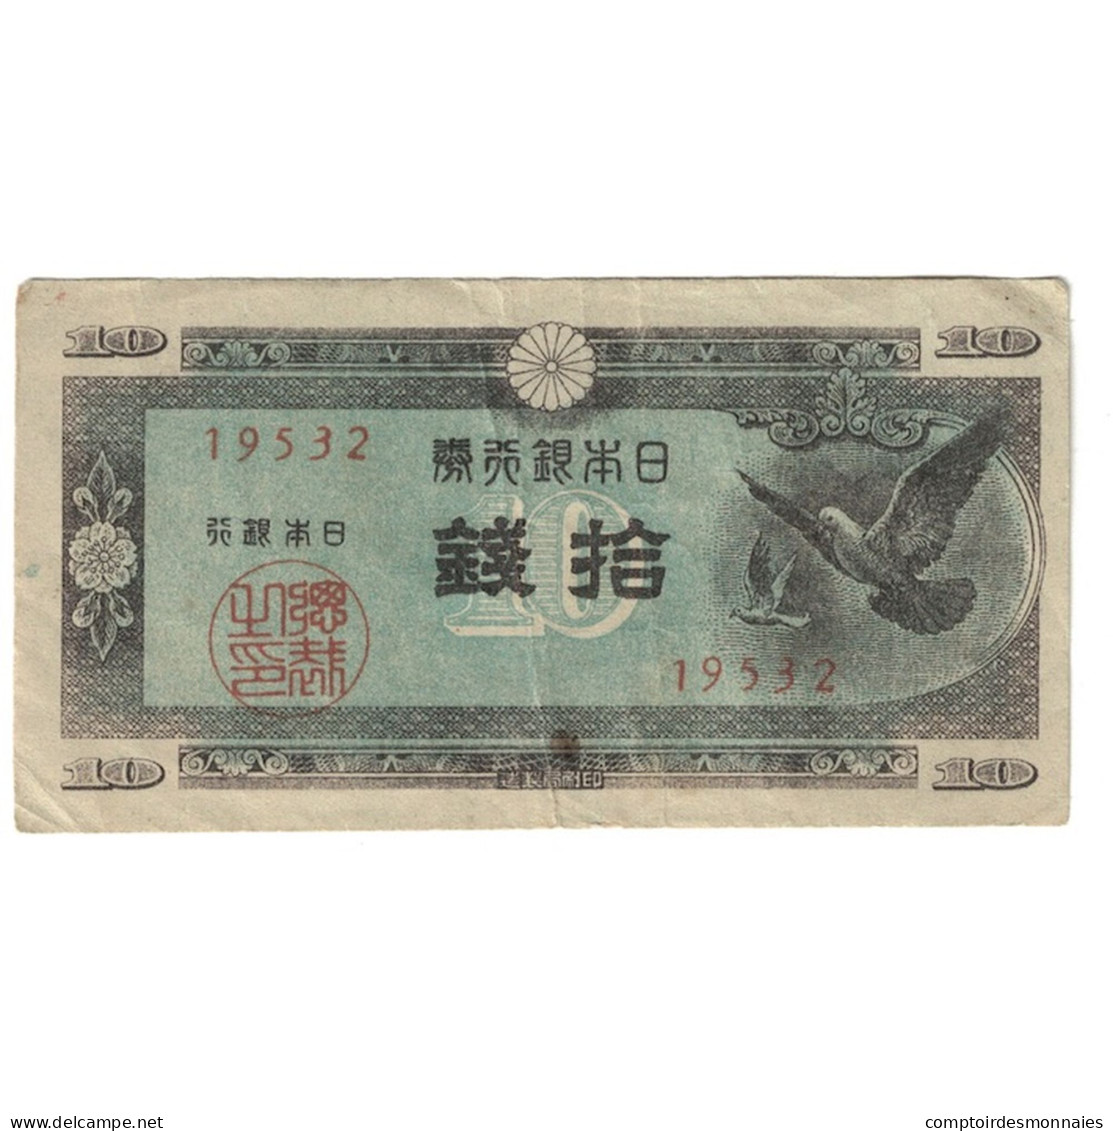 Billet, Japon, 10 Sen, Undated (1947), KM:84, TB+ - Japon